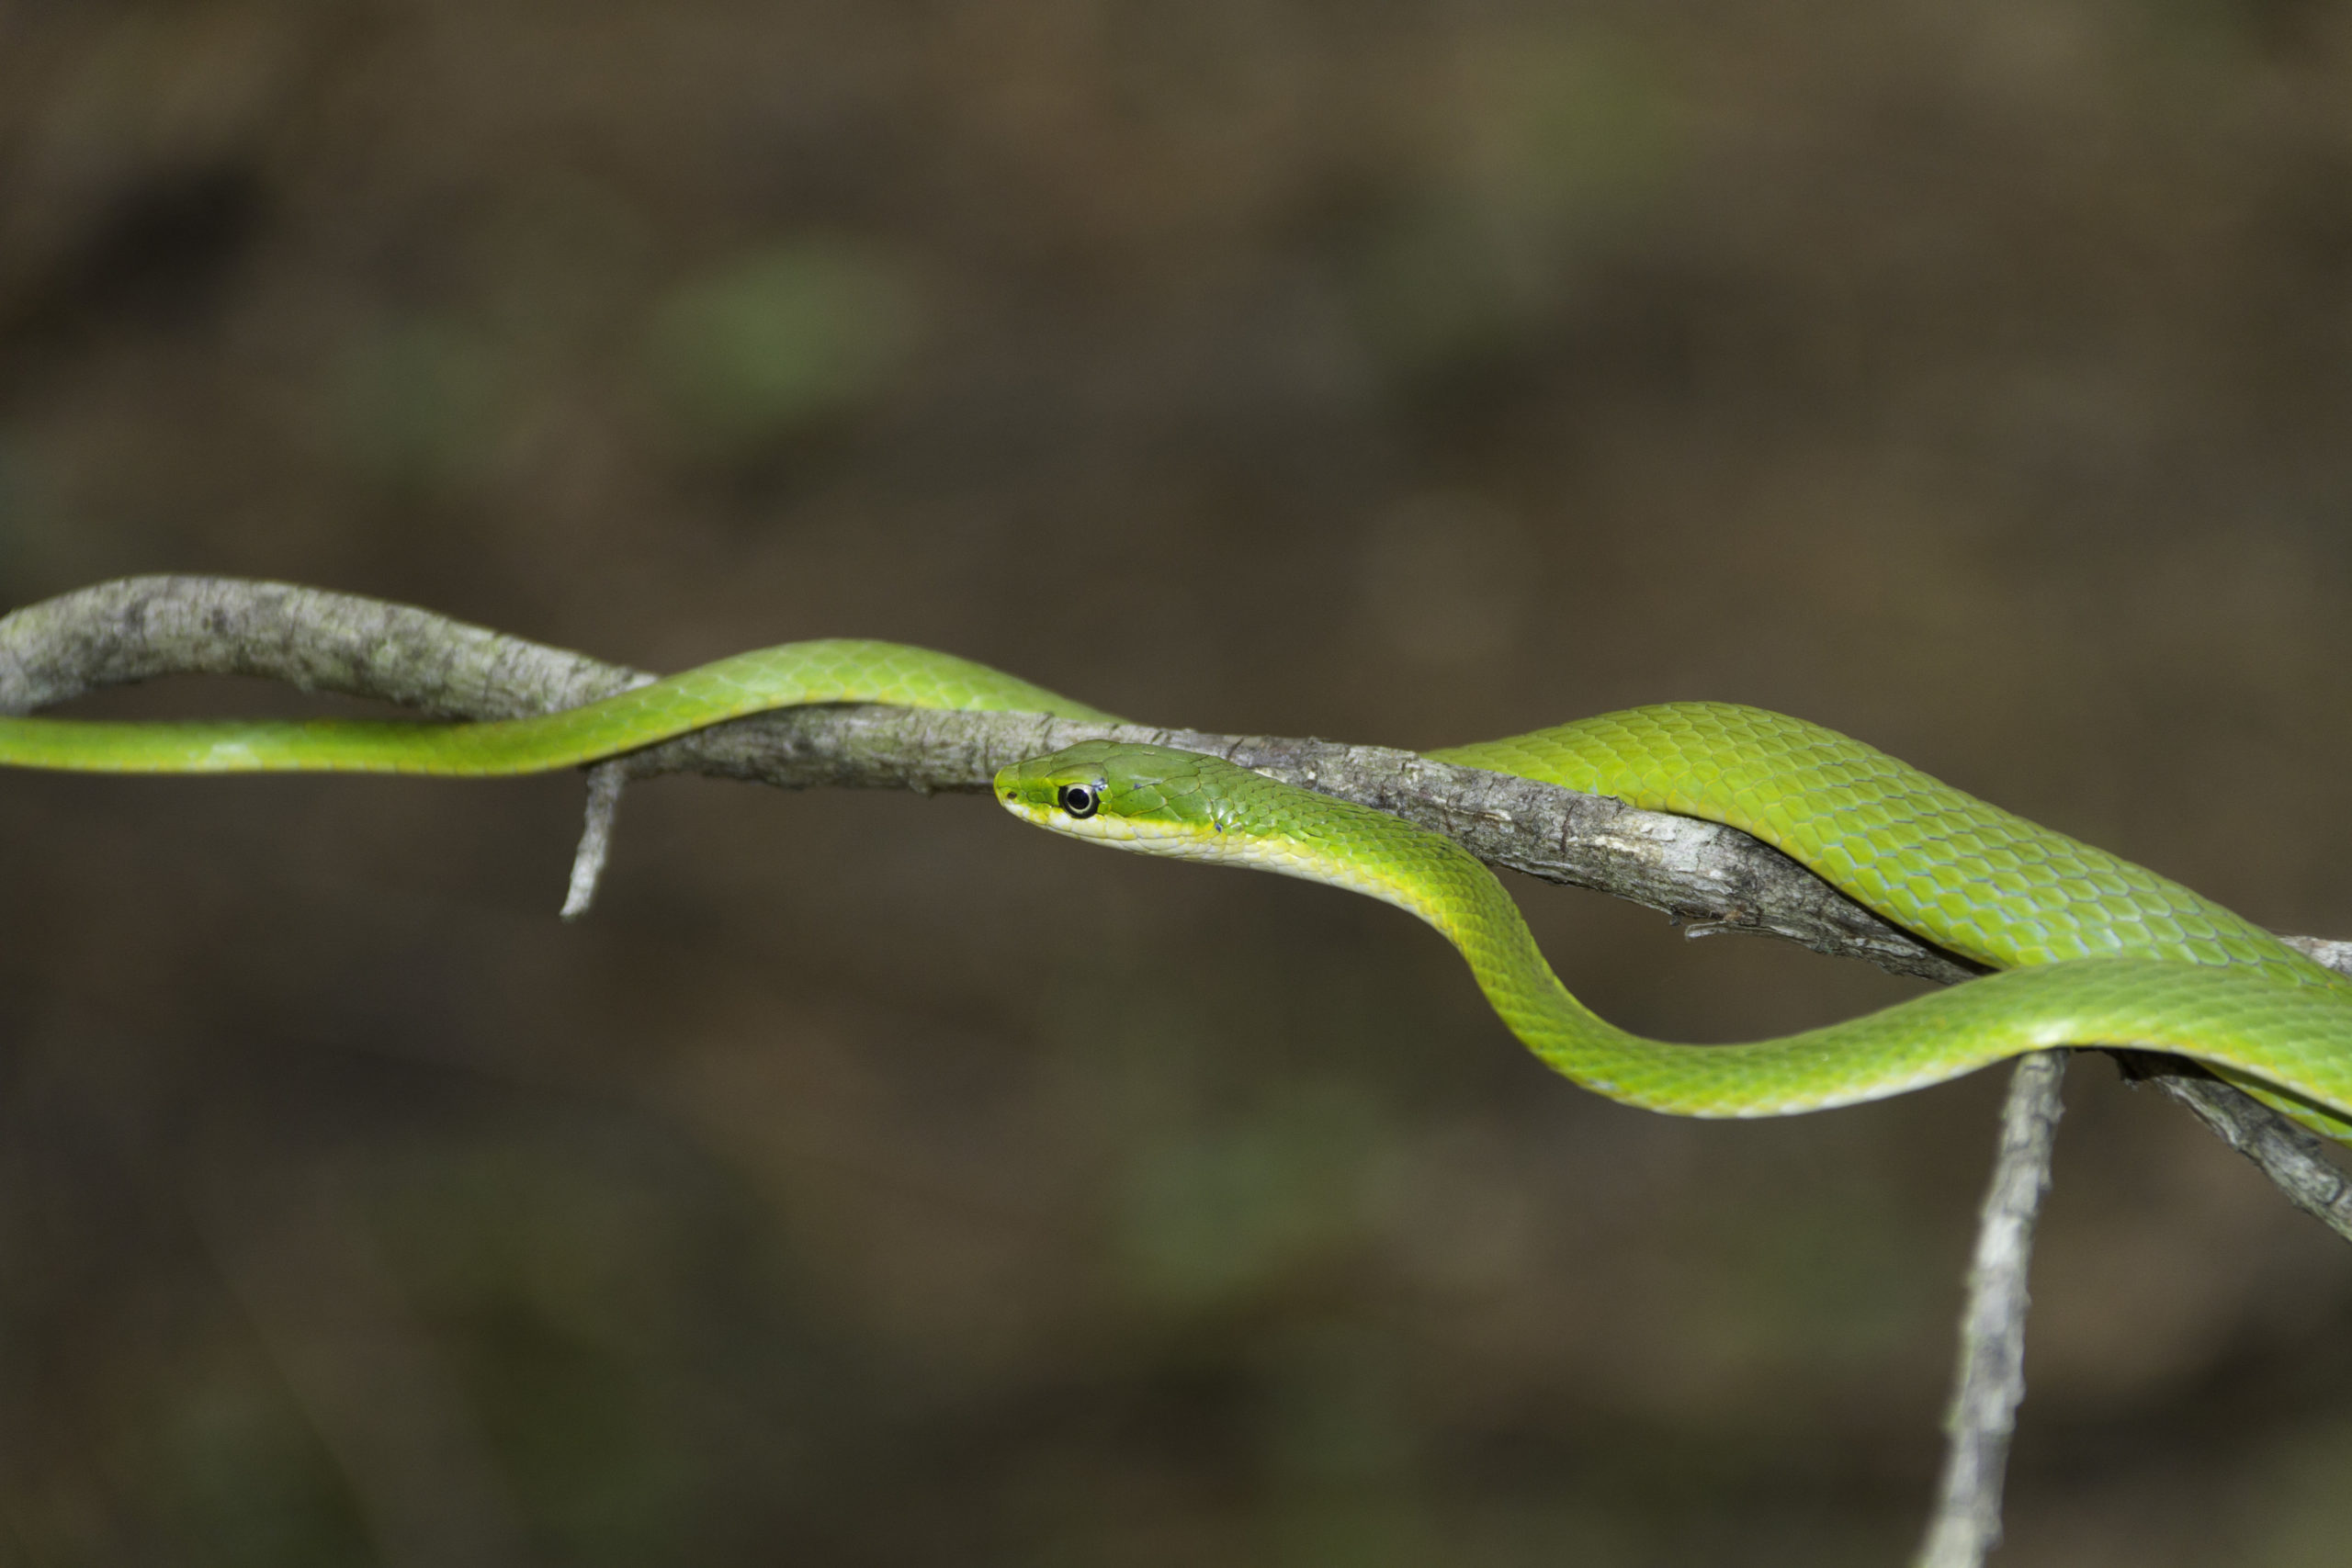 A rough green snake (opheodrys aestivus) climbing on a tree limb.